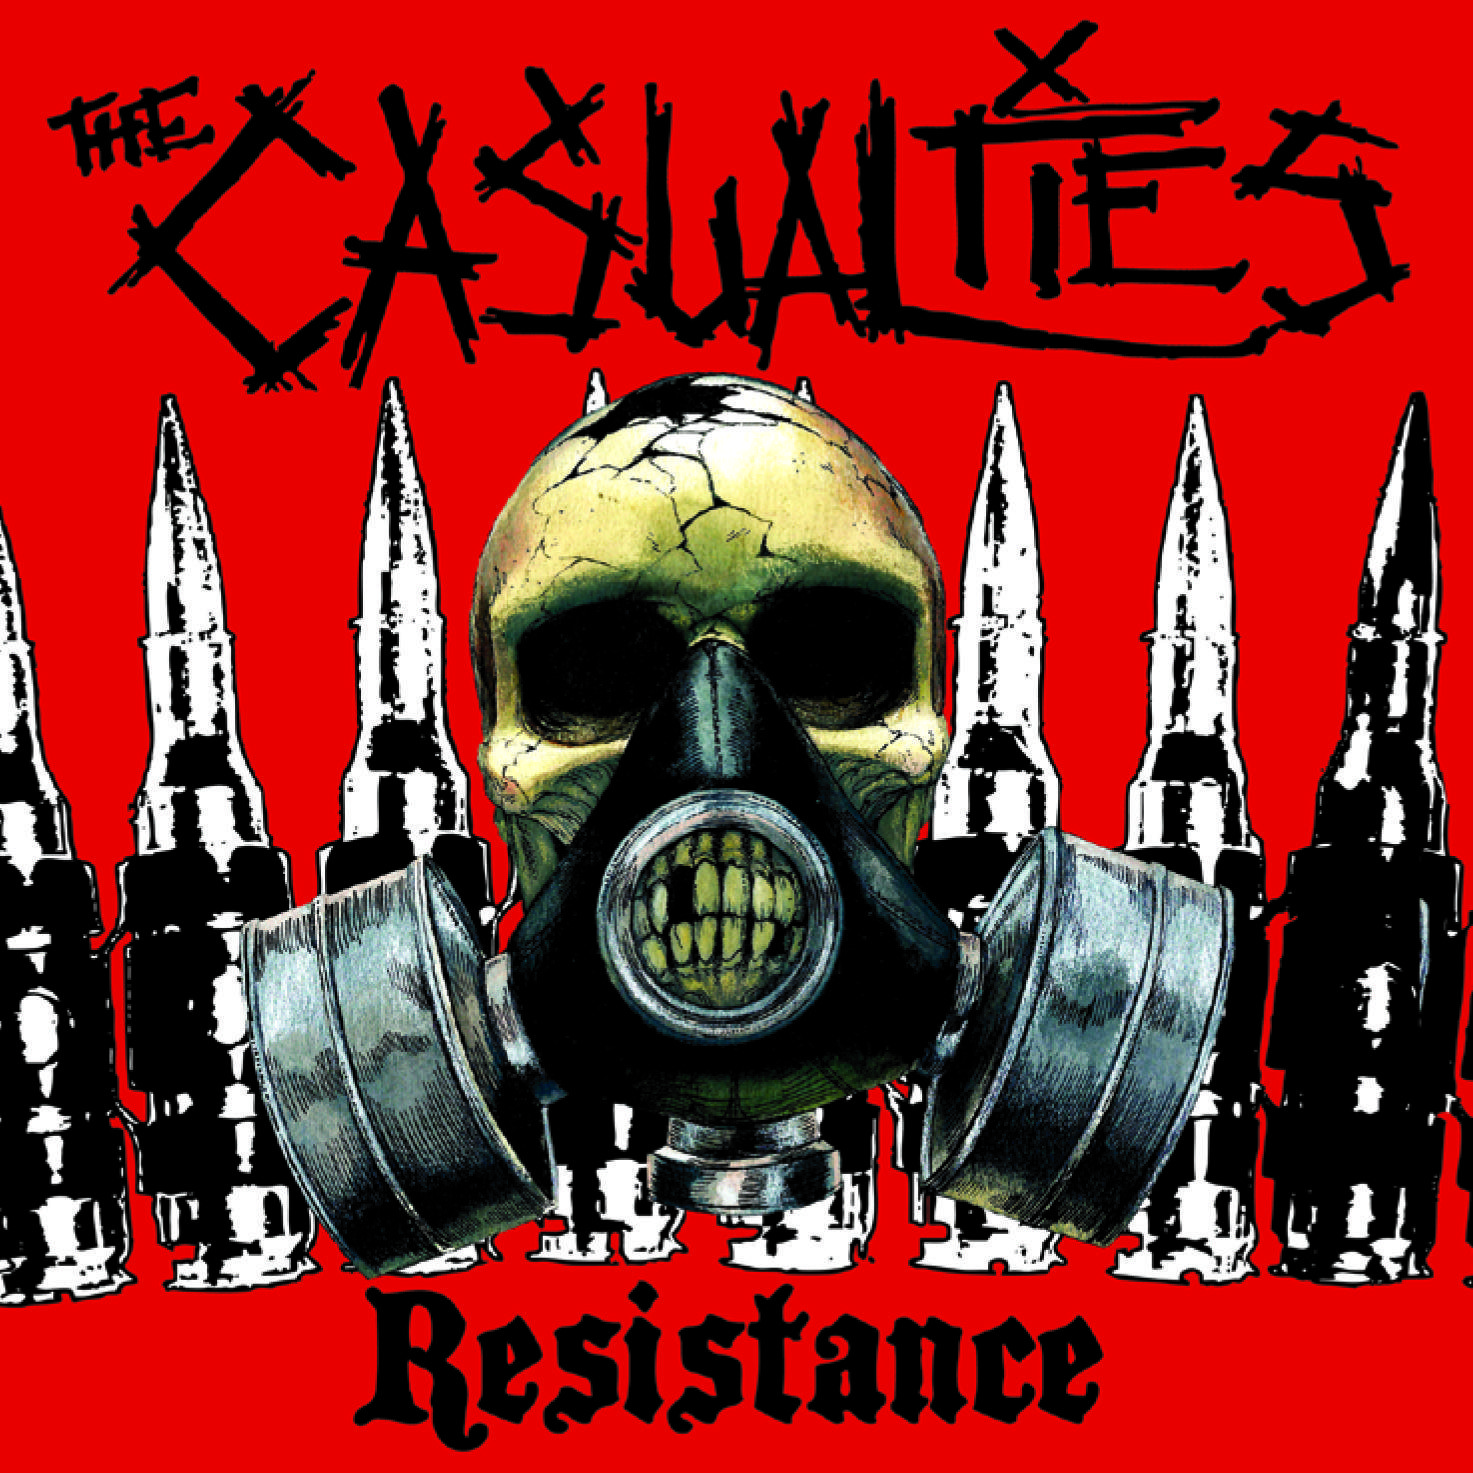 THE CASUALTIES hardcore punk rock dark skull ananrchy gas mask